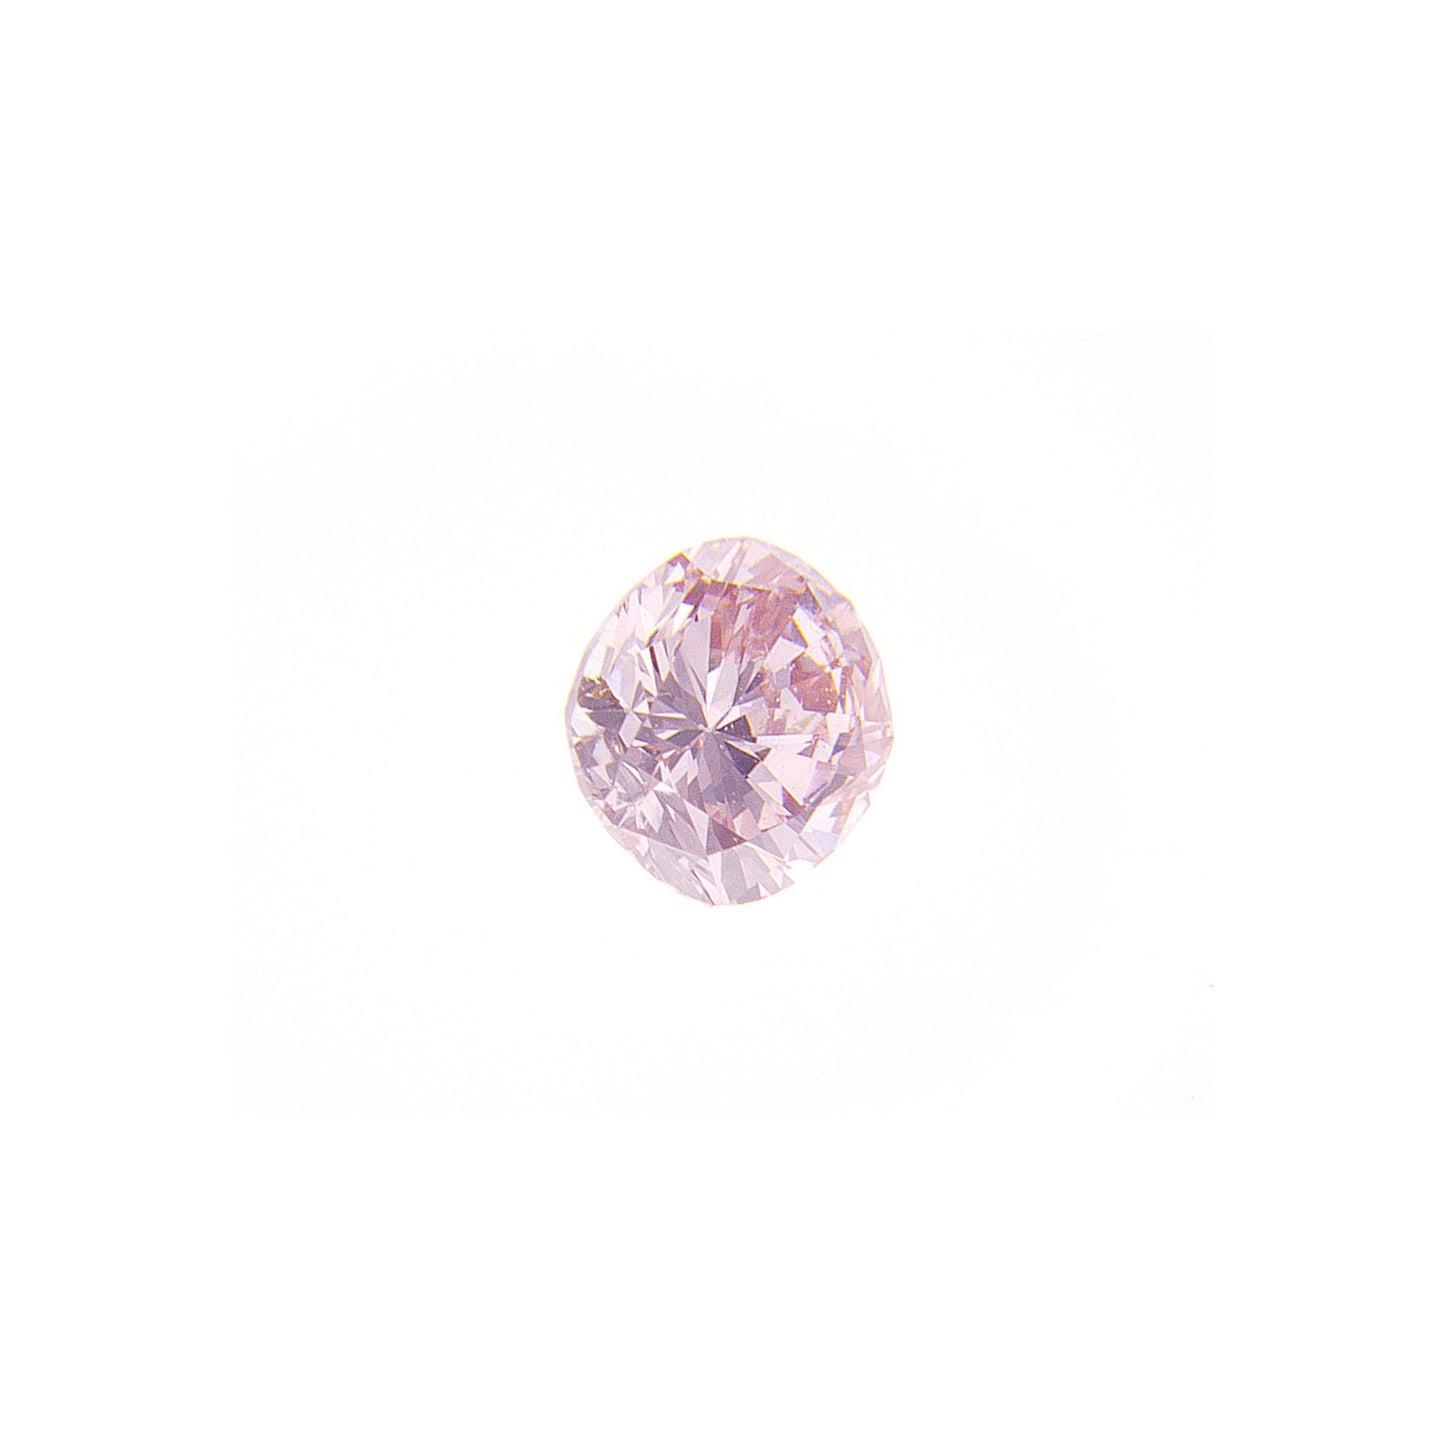 0.13ct Fancy Pink, Cushion Diamond - 3.44 x 3.04 x 1.94mm